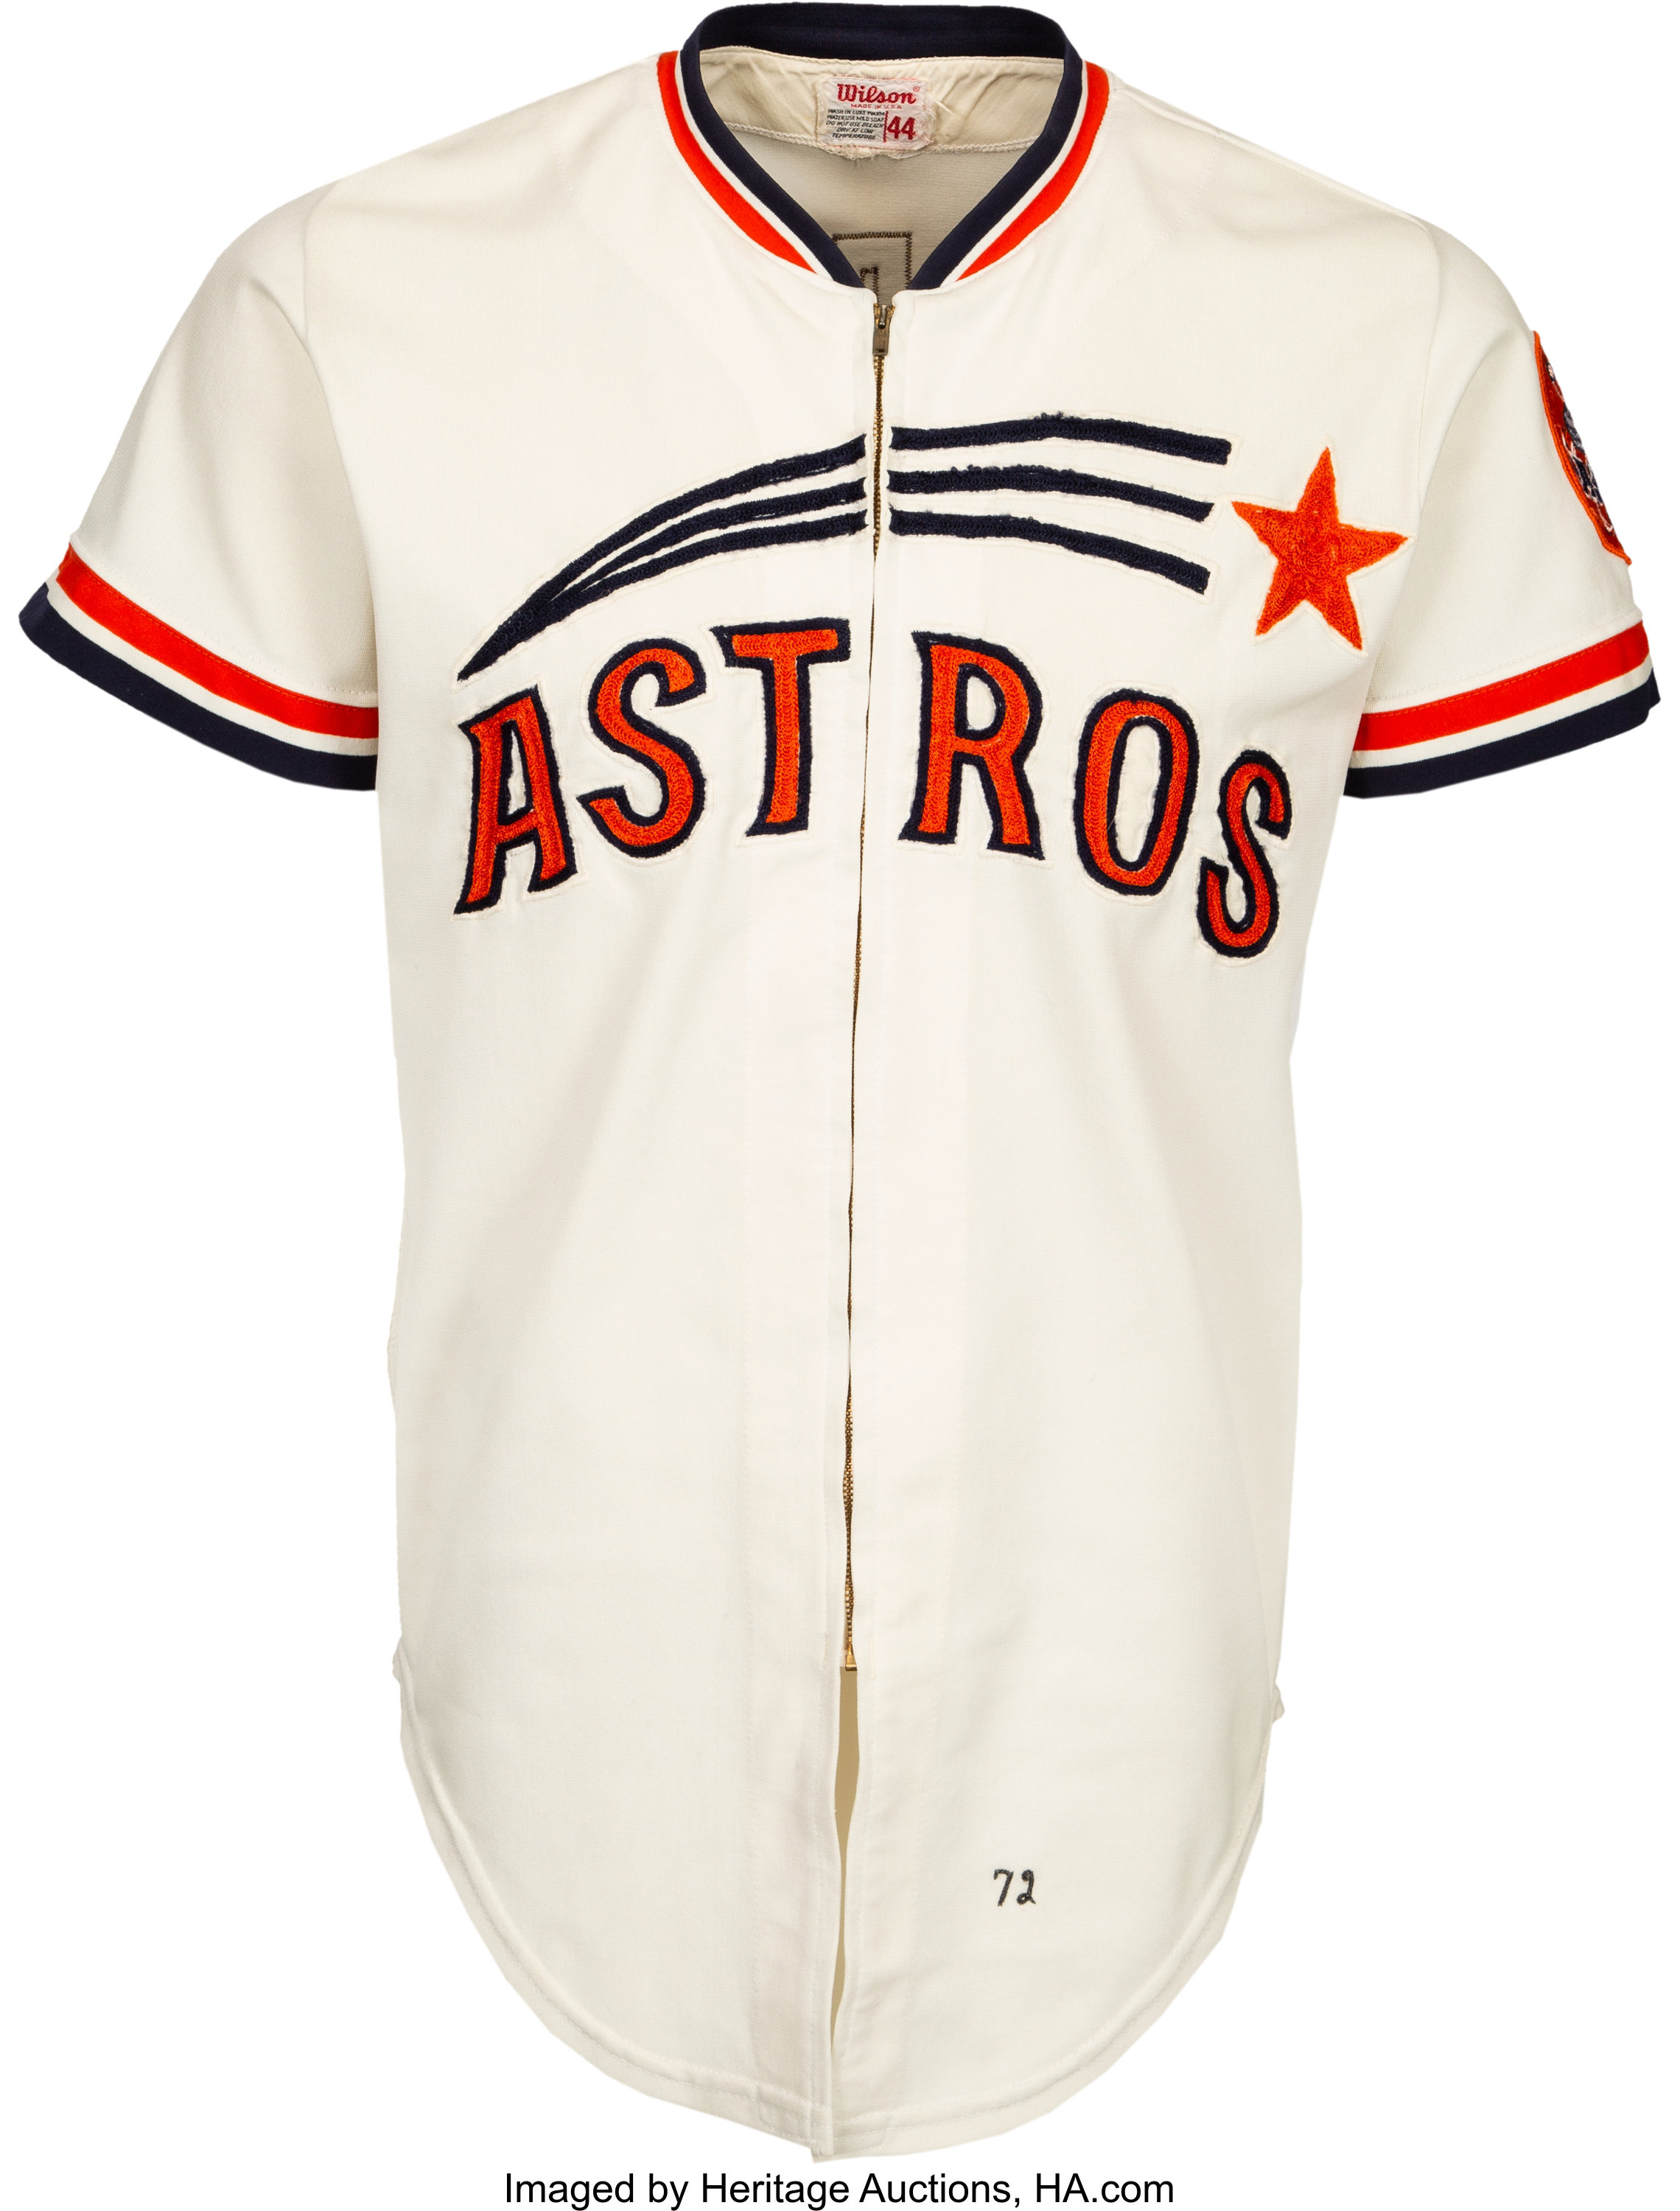 astros old jerseys